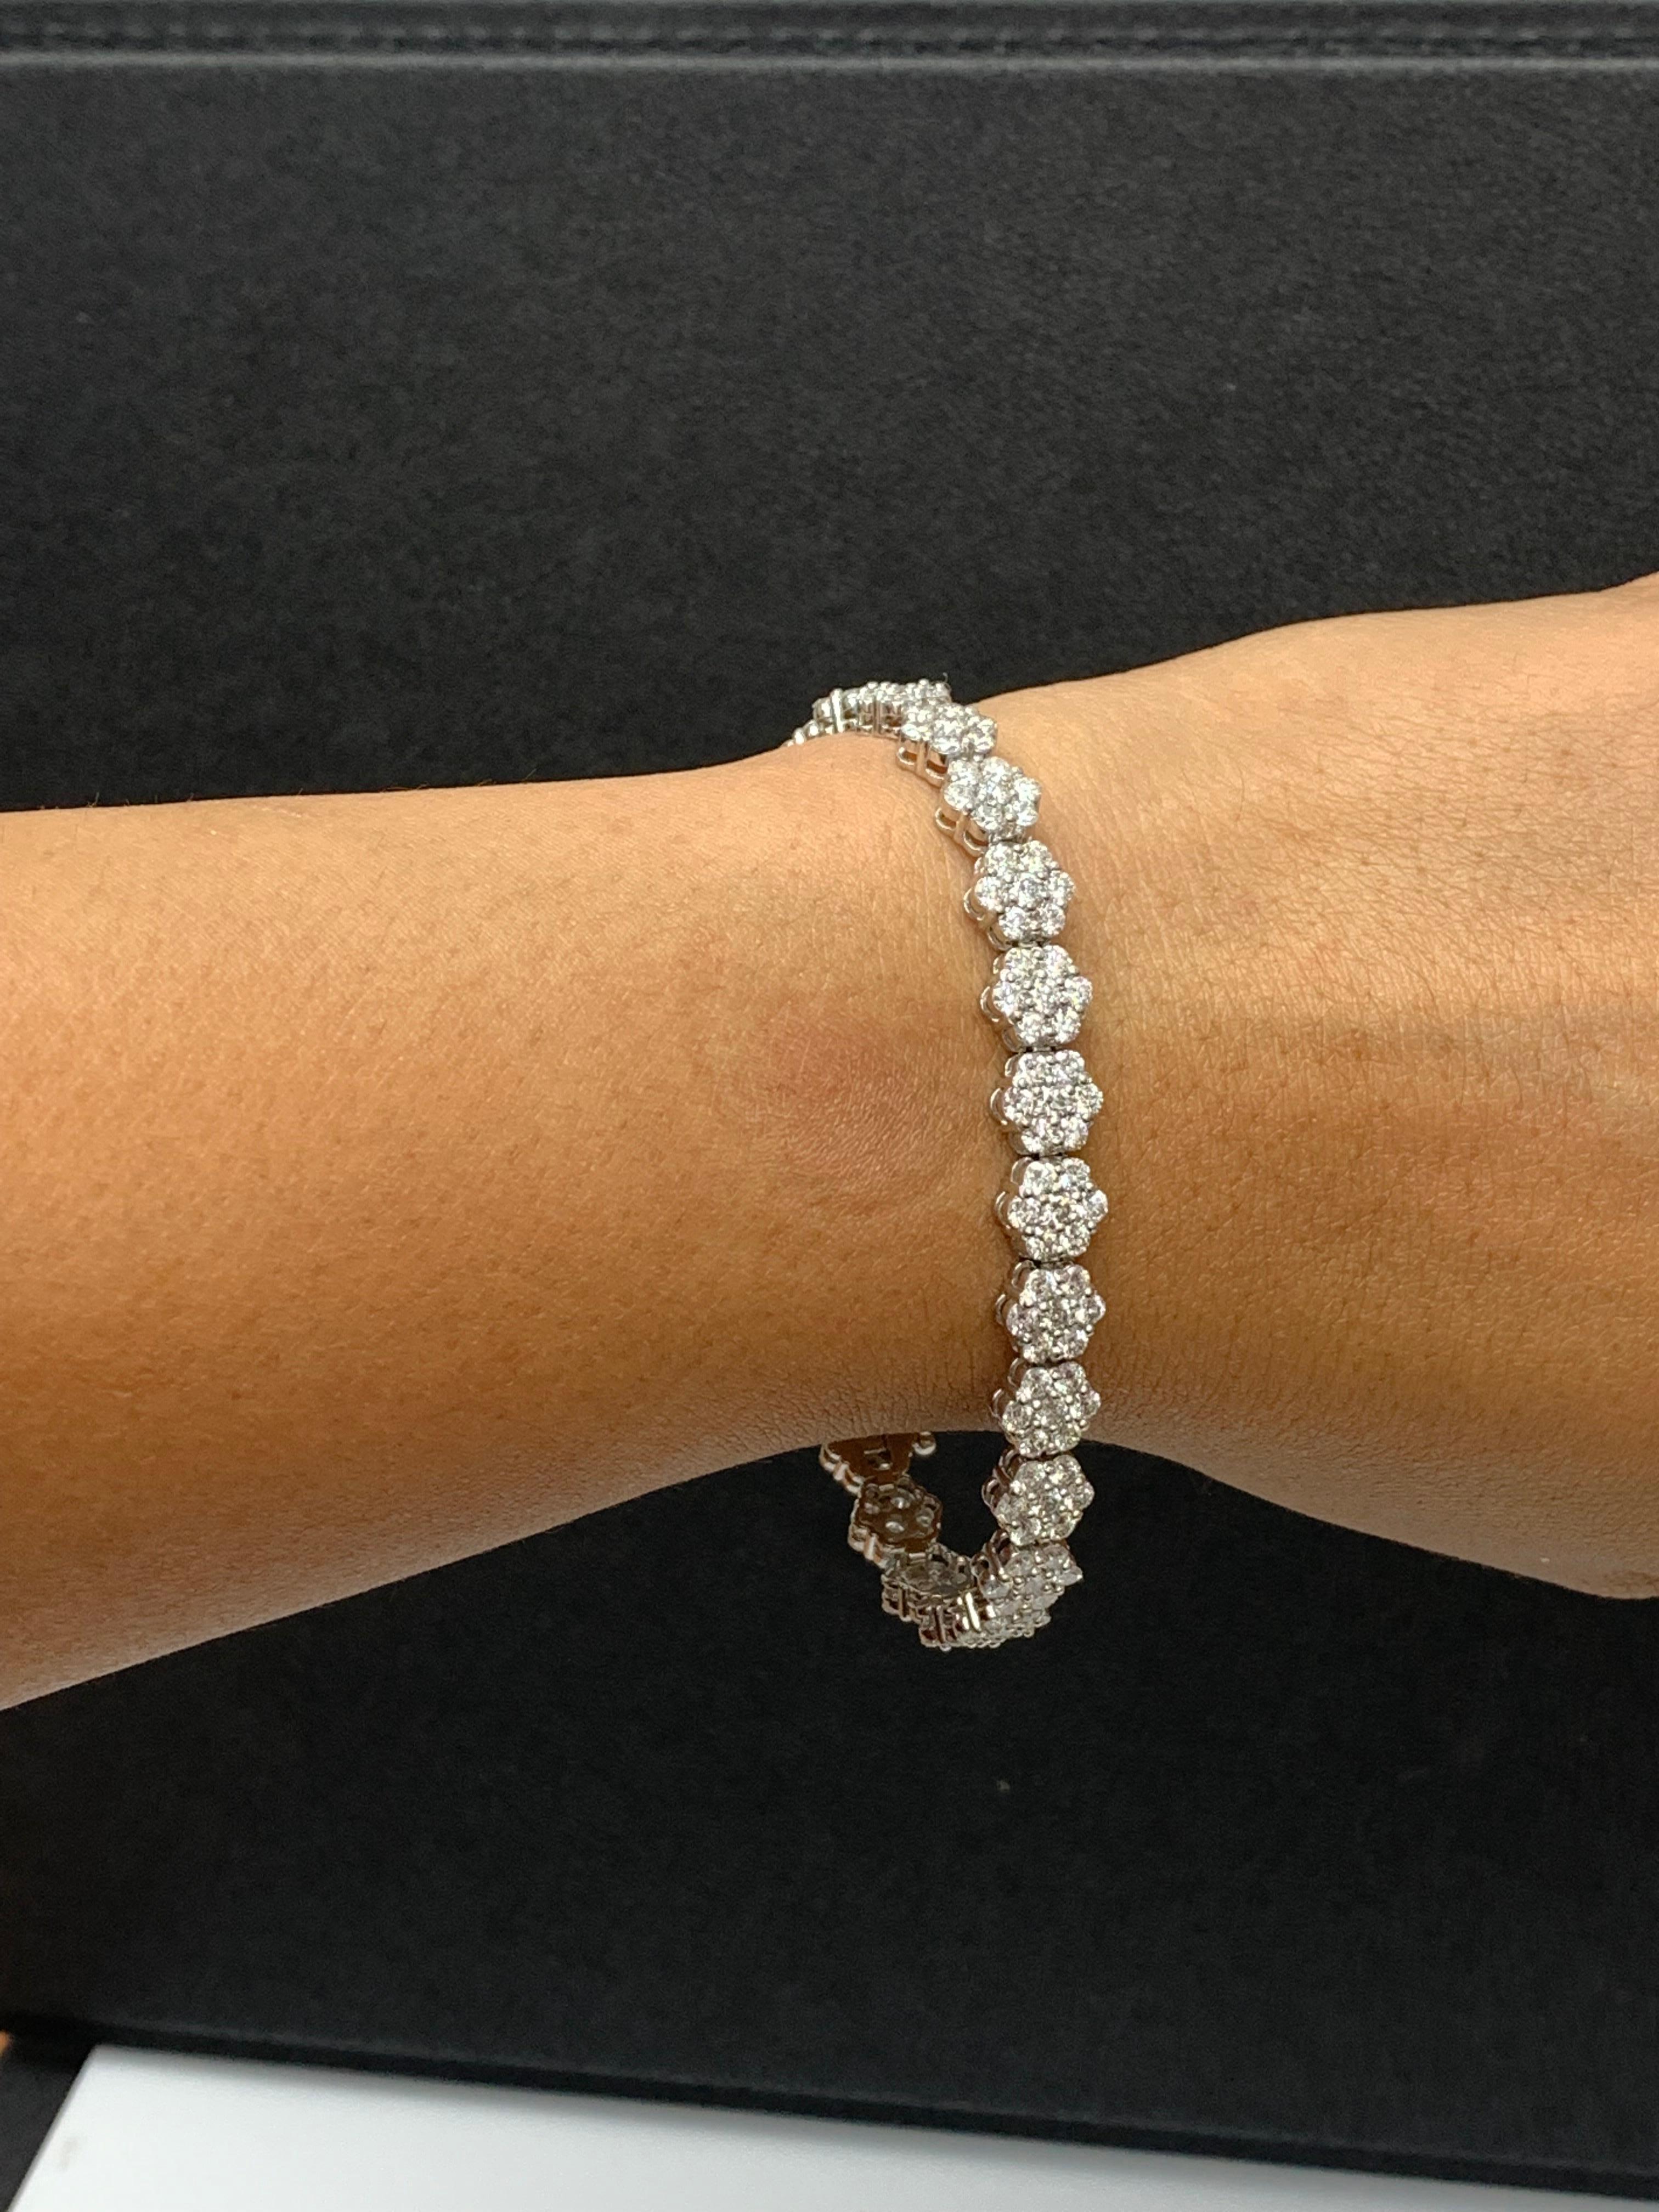 8.10 Carat Brilliant Cut Round Diamond Flower Bracelet in 14k White Gold For Sale 4